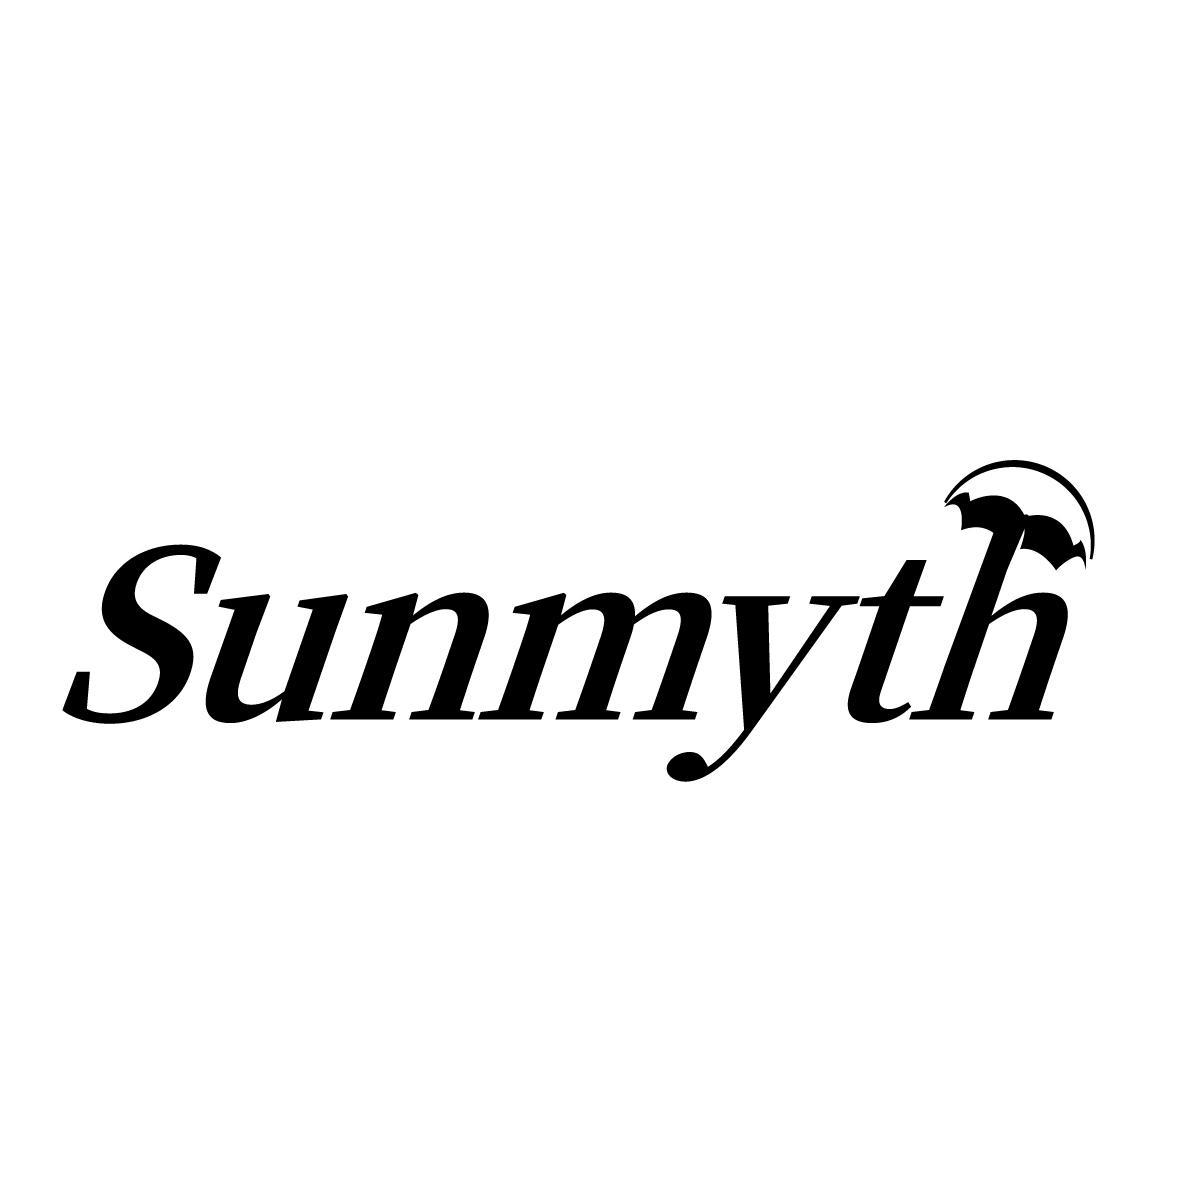 SUNMYTH